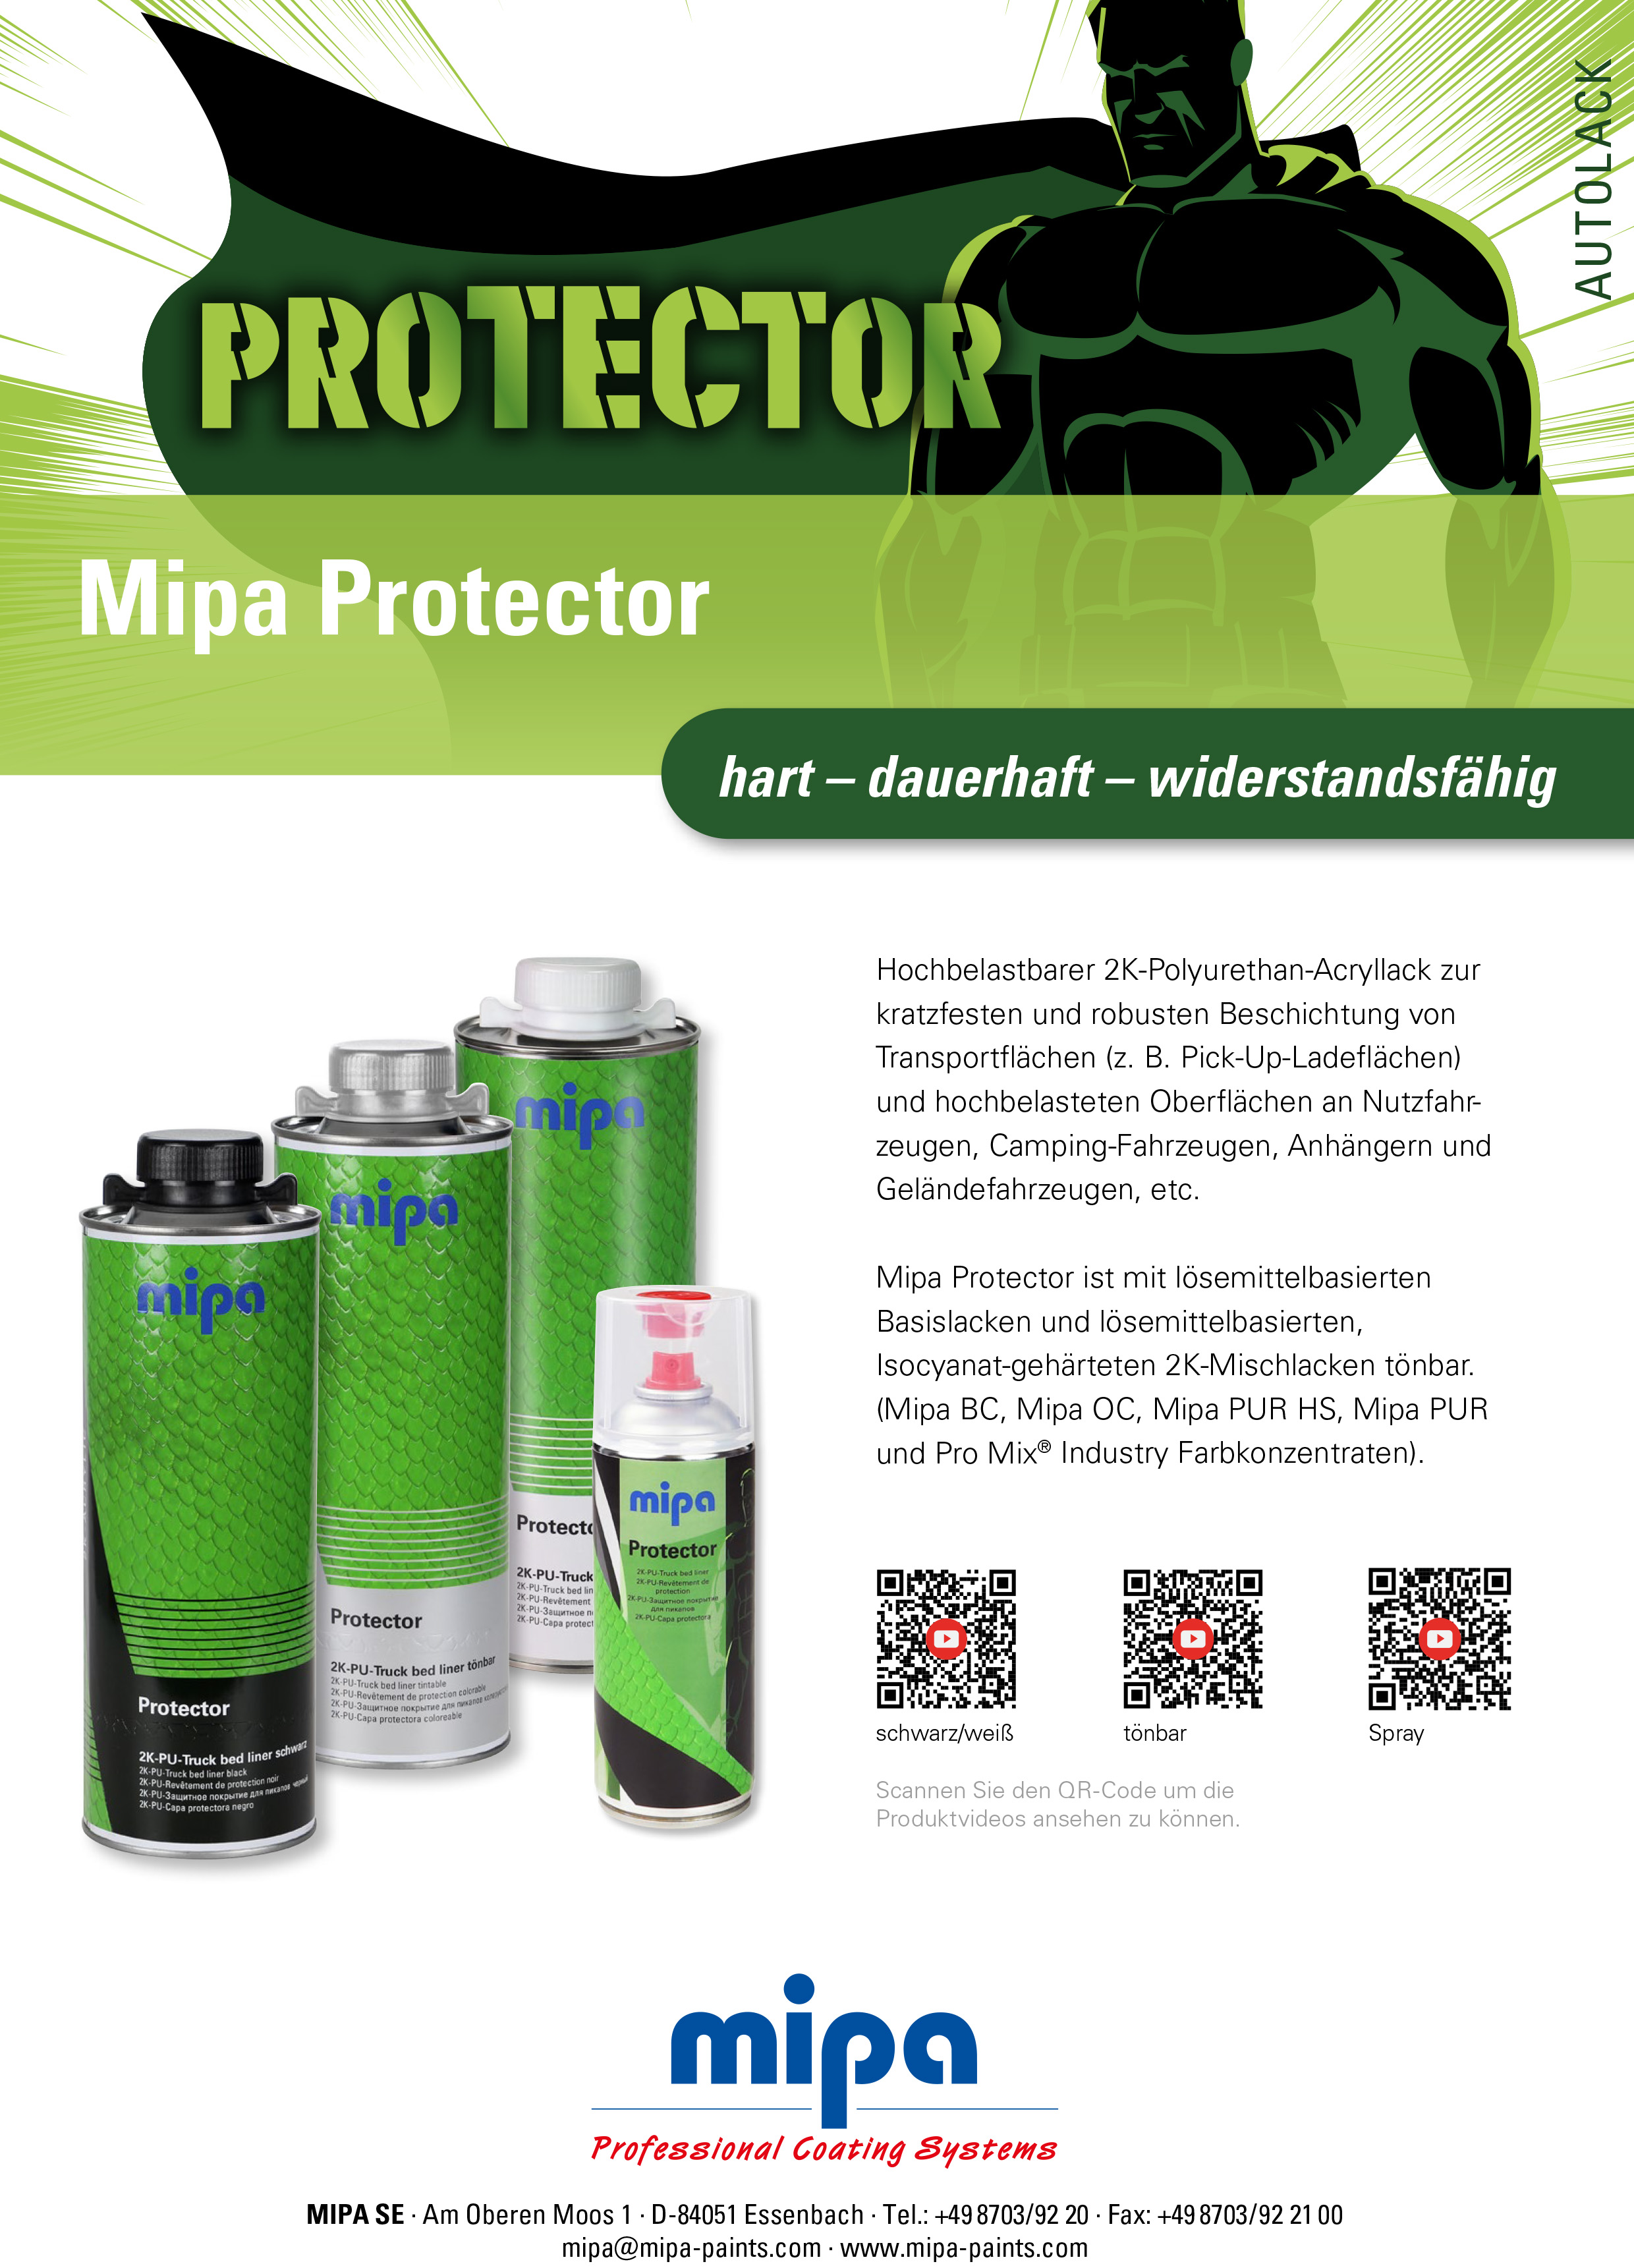 Mipa_Protector_toenbar-schwarz-weiss-Spray_DE